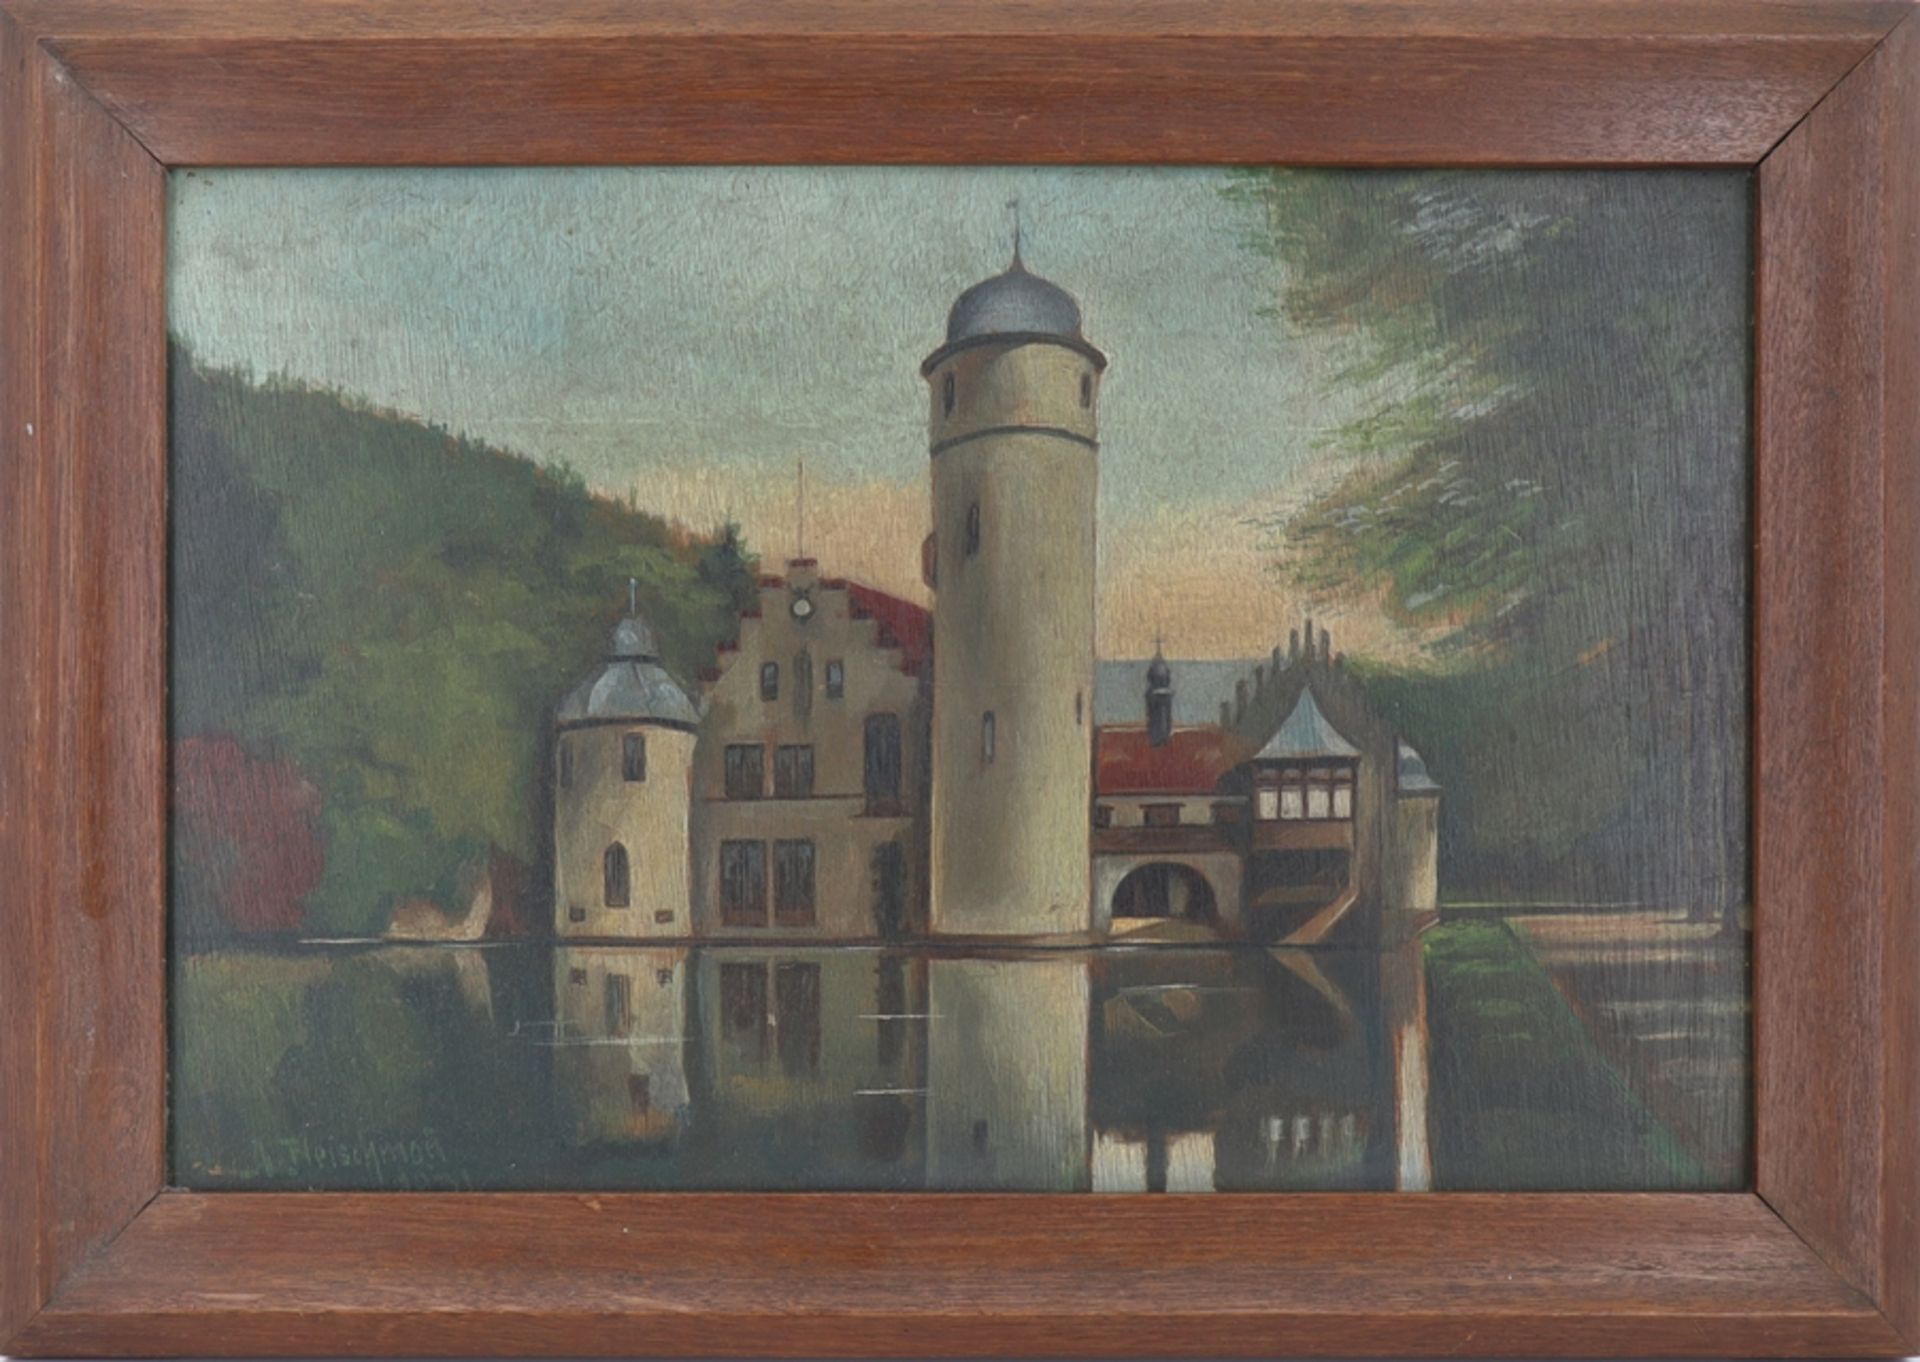 Painting oil on wood Mespelbrunn Castle, signed A. Fleischmann, dated 1931. - Image 4 of 4